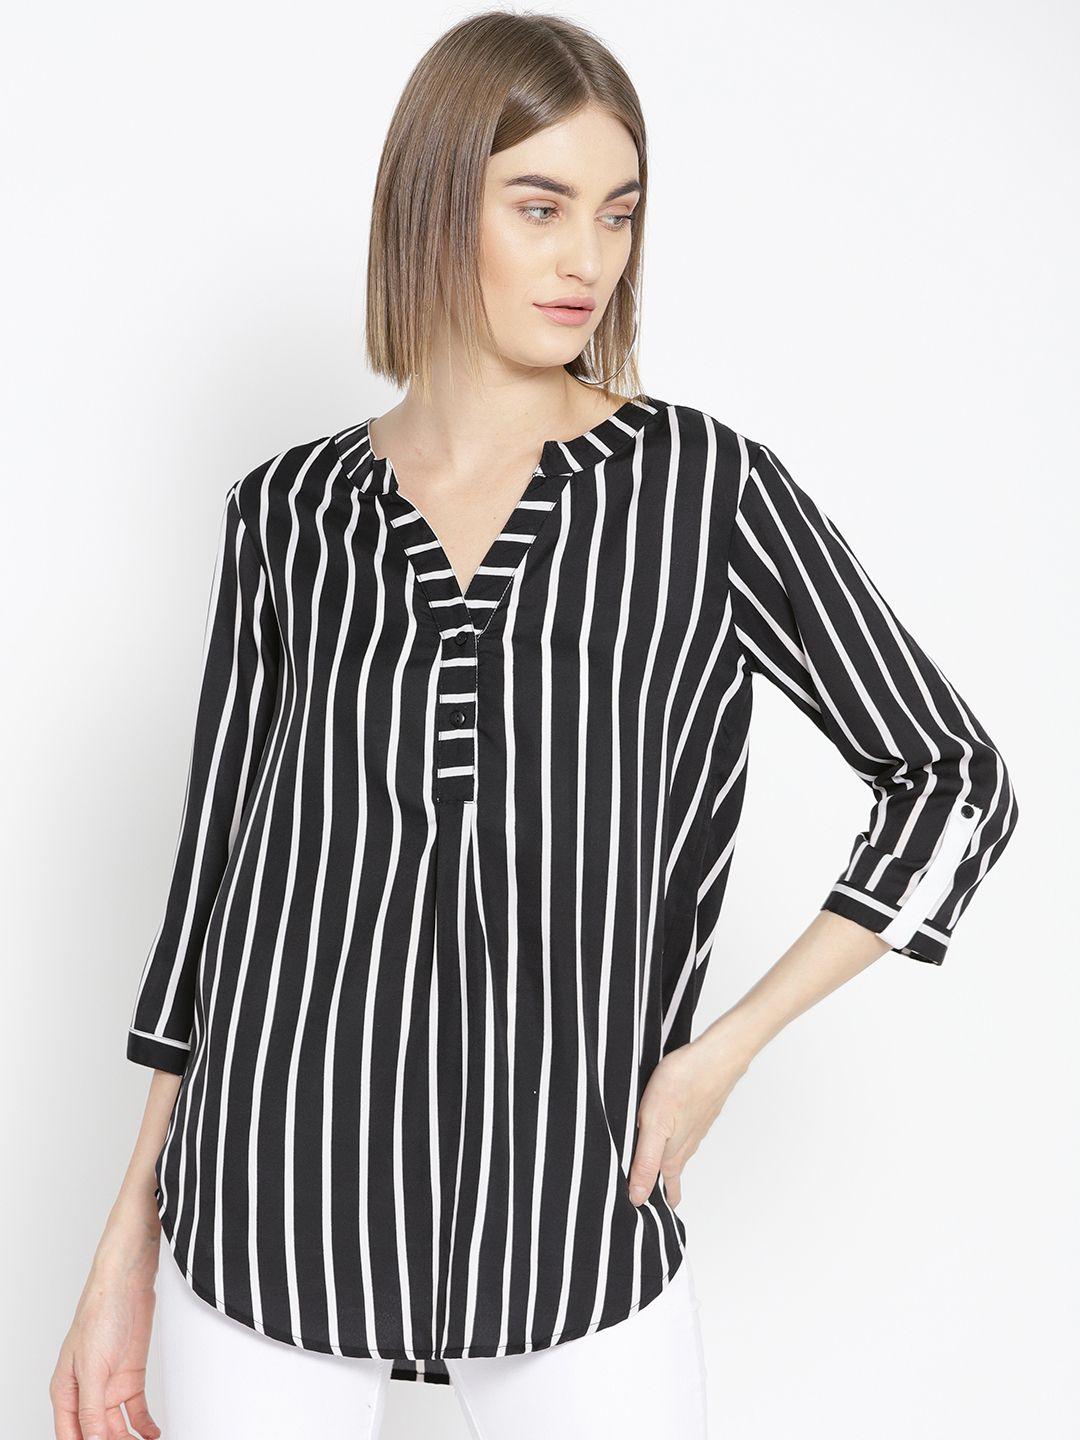 qurvii plus size women black  white striped shirt style top